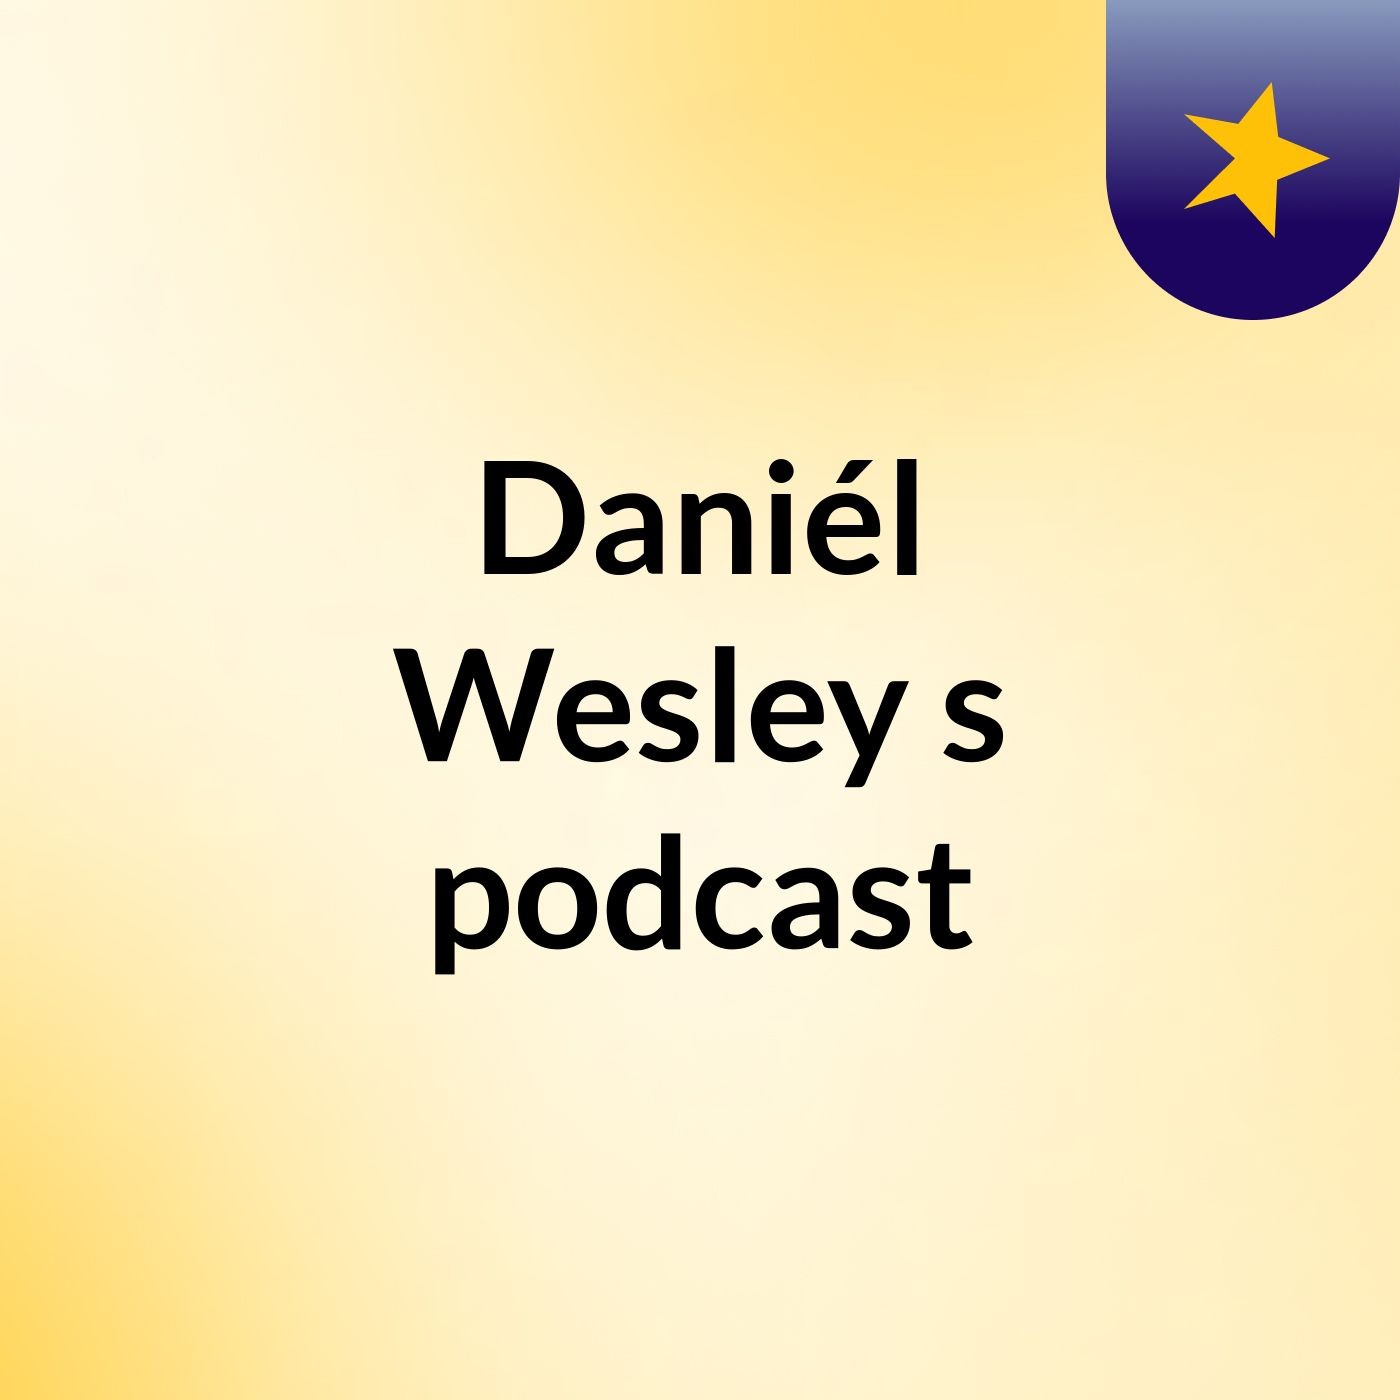 Episode 14 - Daniél Wesley's podcast